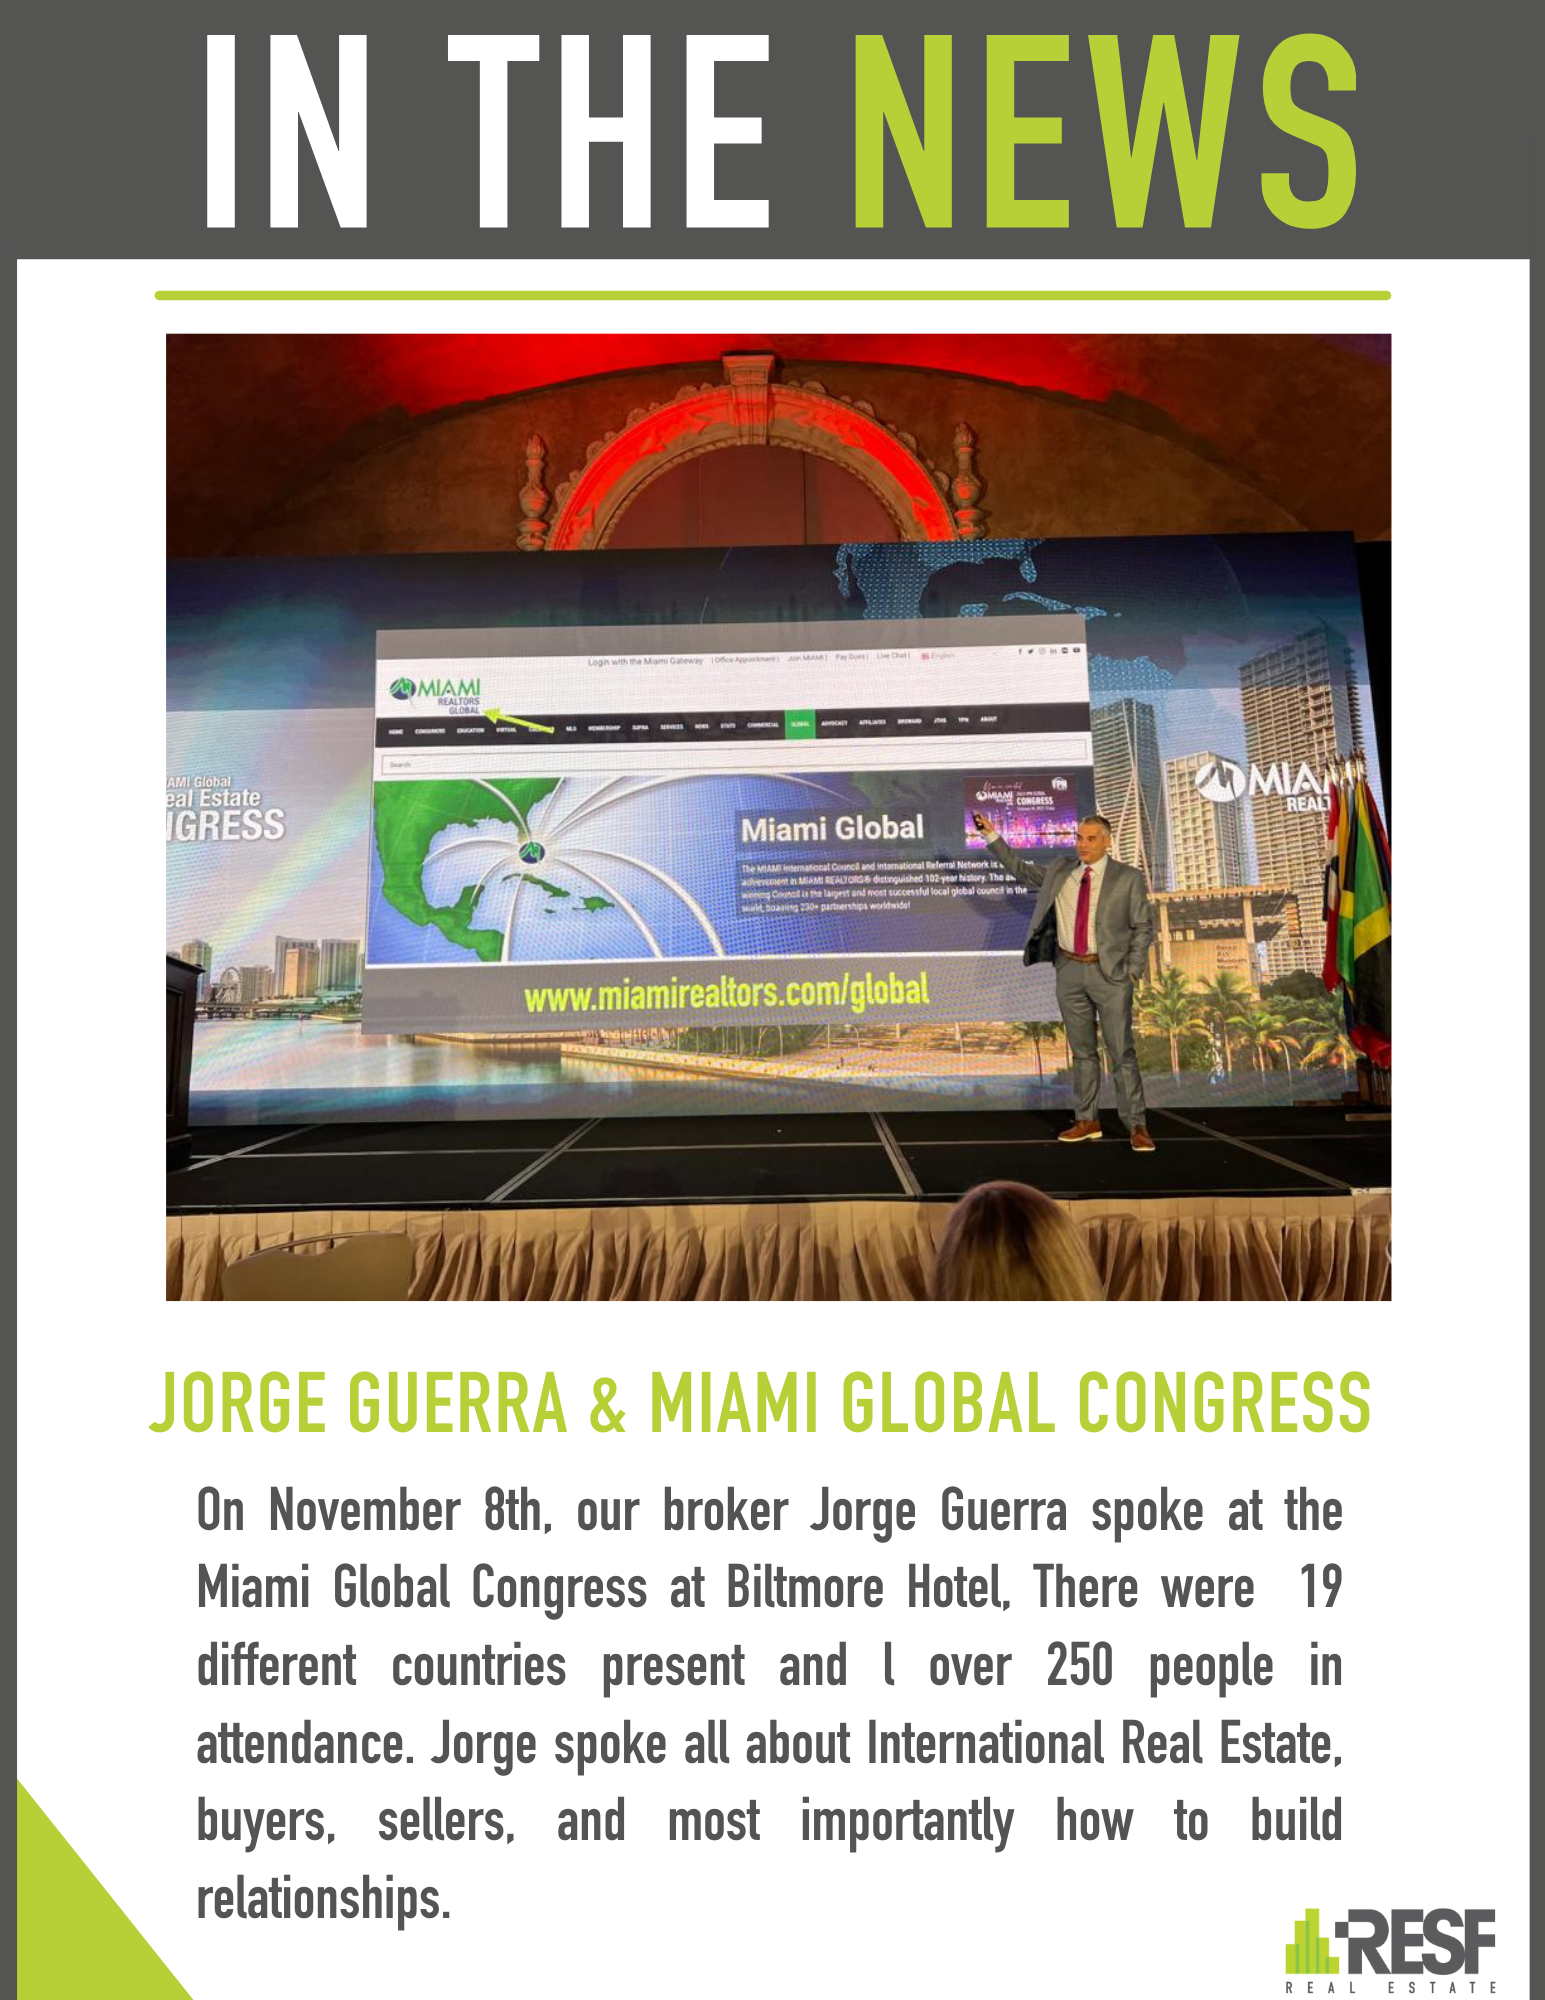 Jorge Guerra & Miami Global Congress